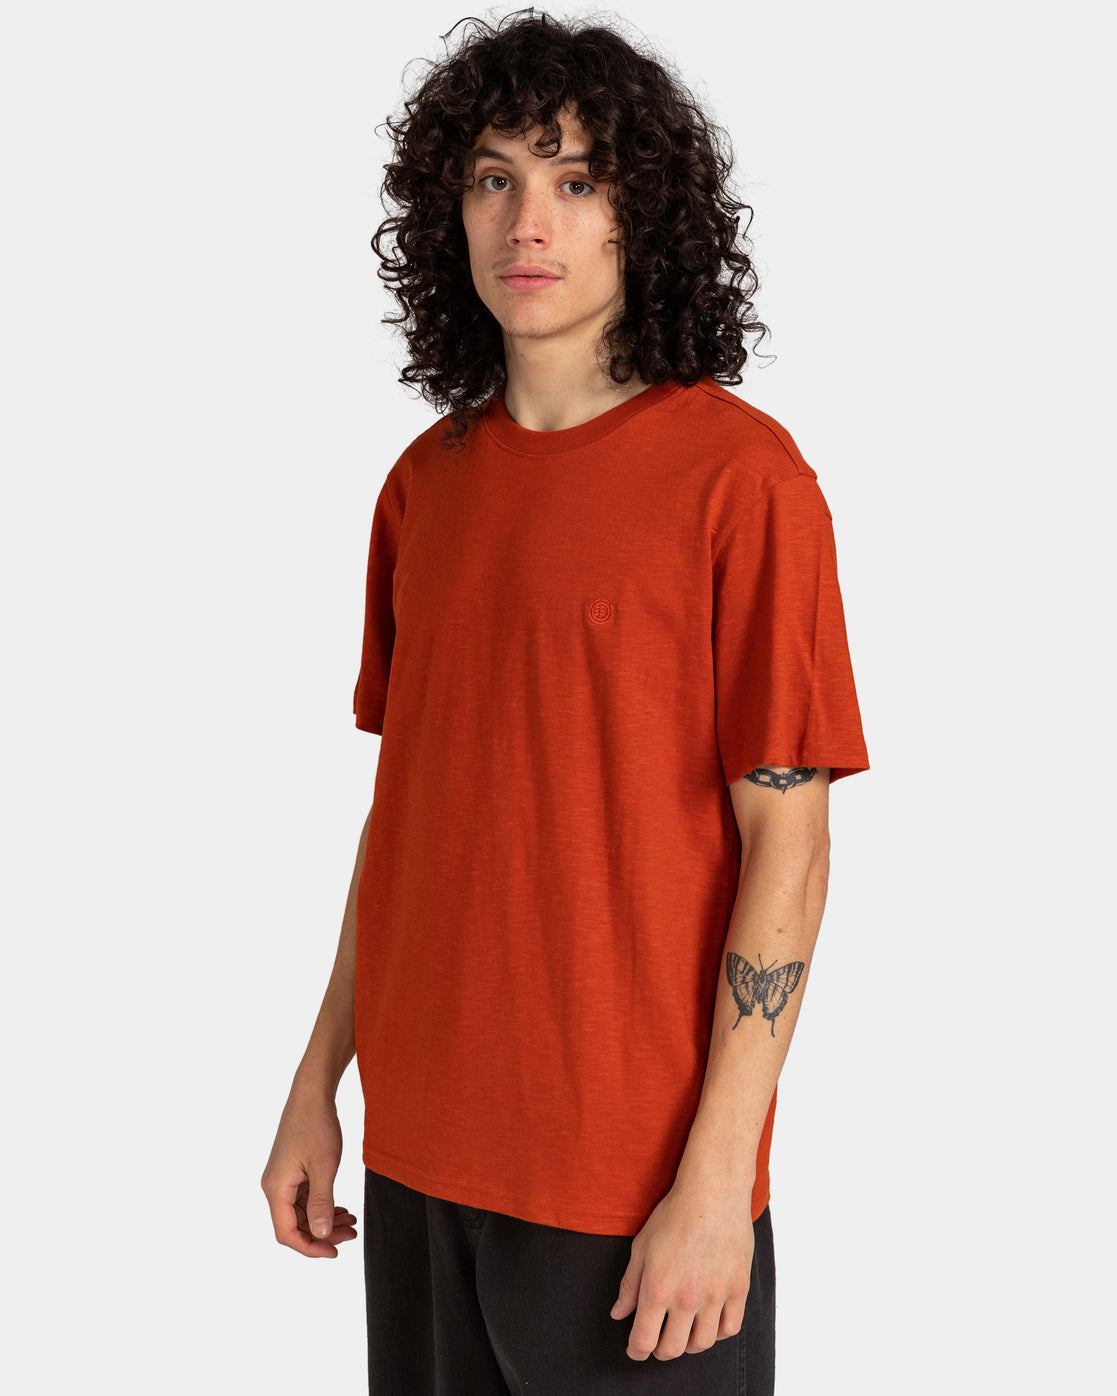 Camiseta Element Skateboards Crail Picante